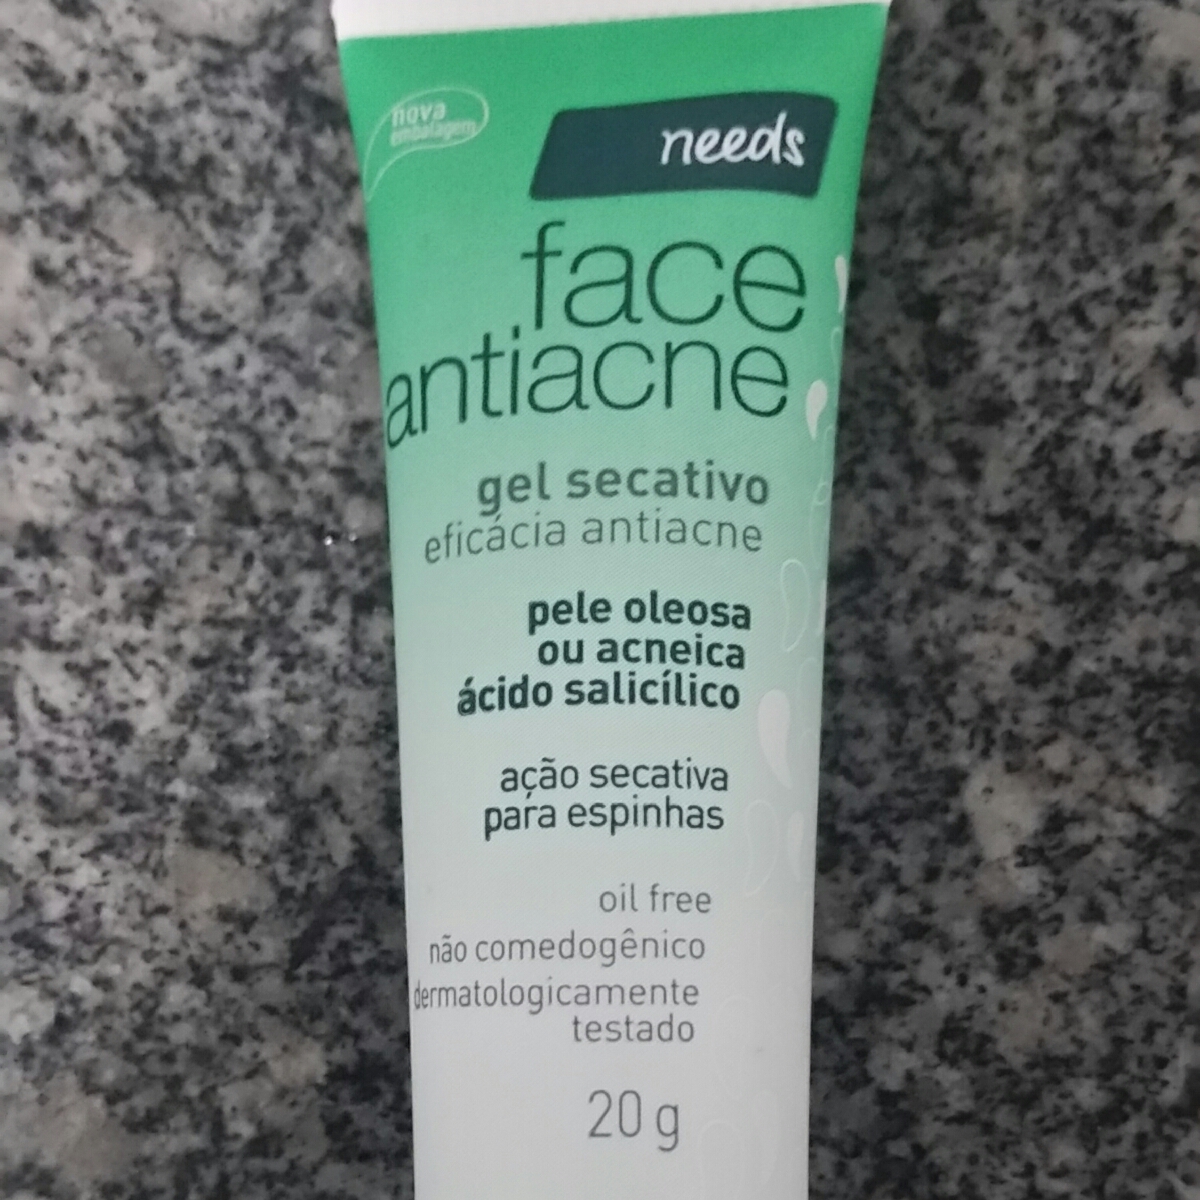 Needs Face antiacne Reviews | abillion